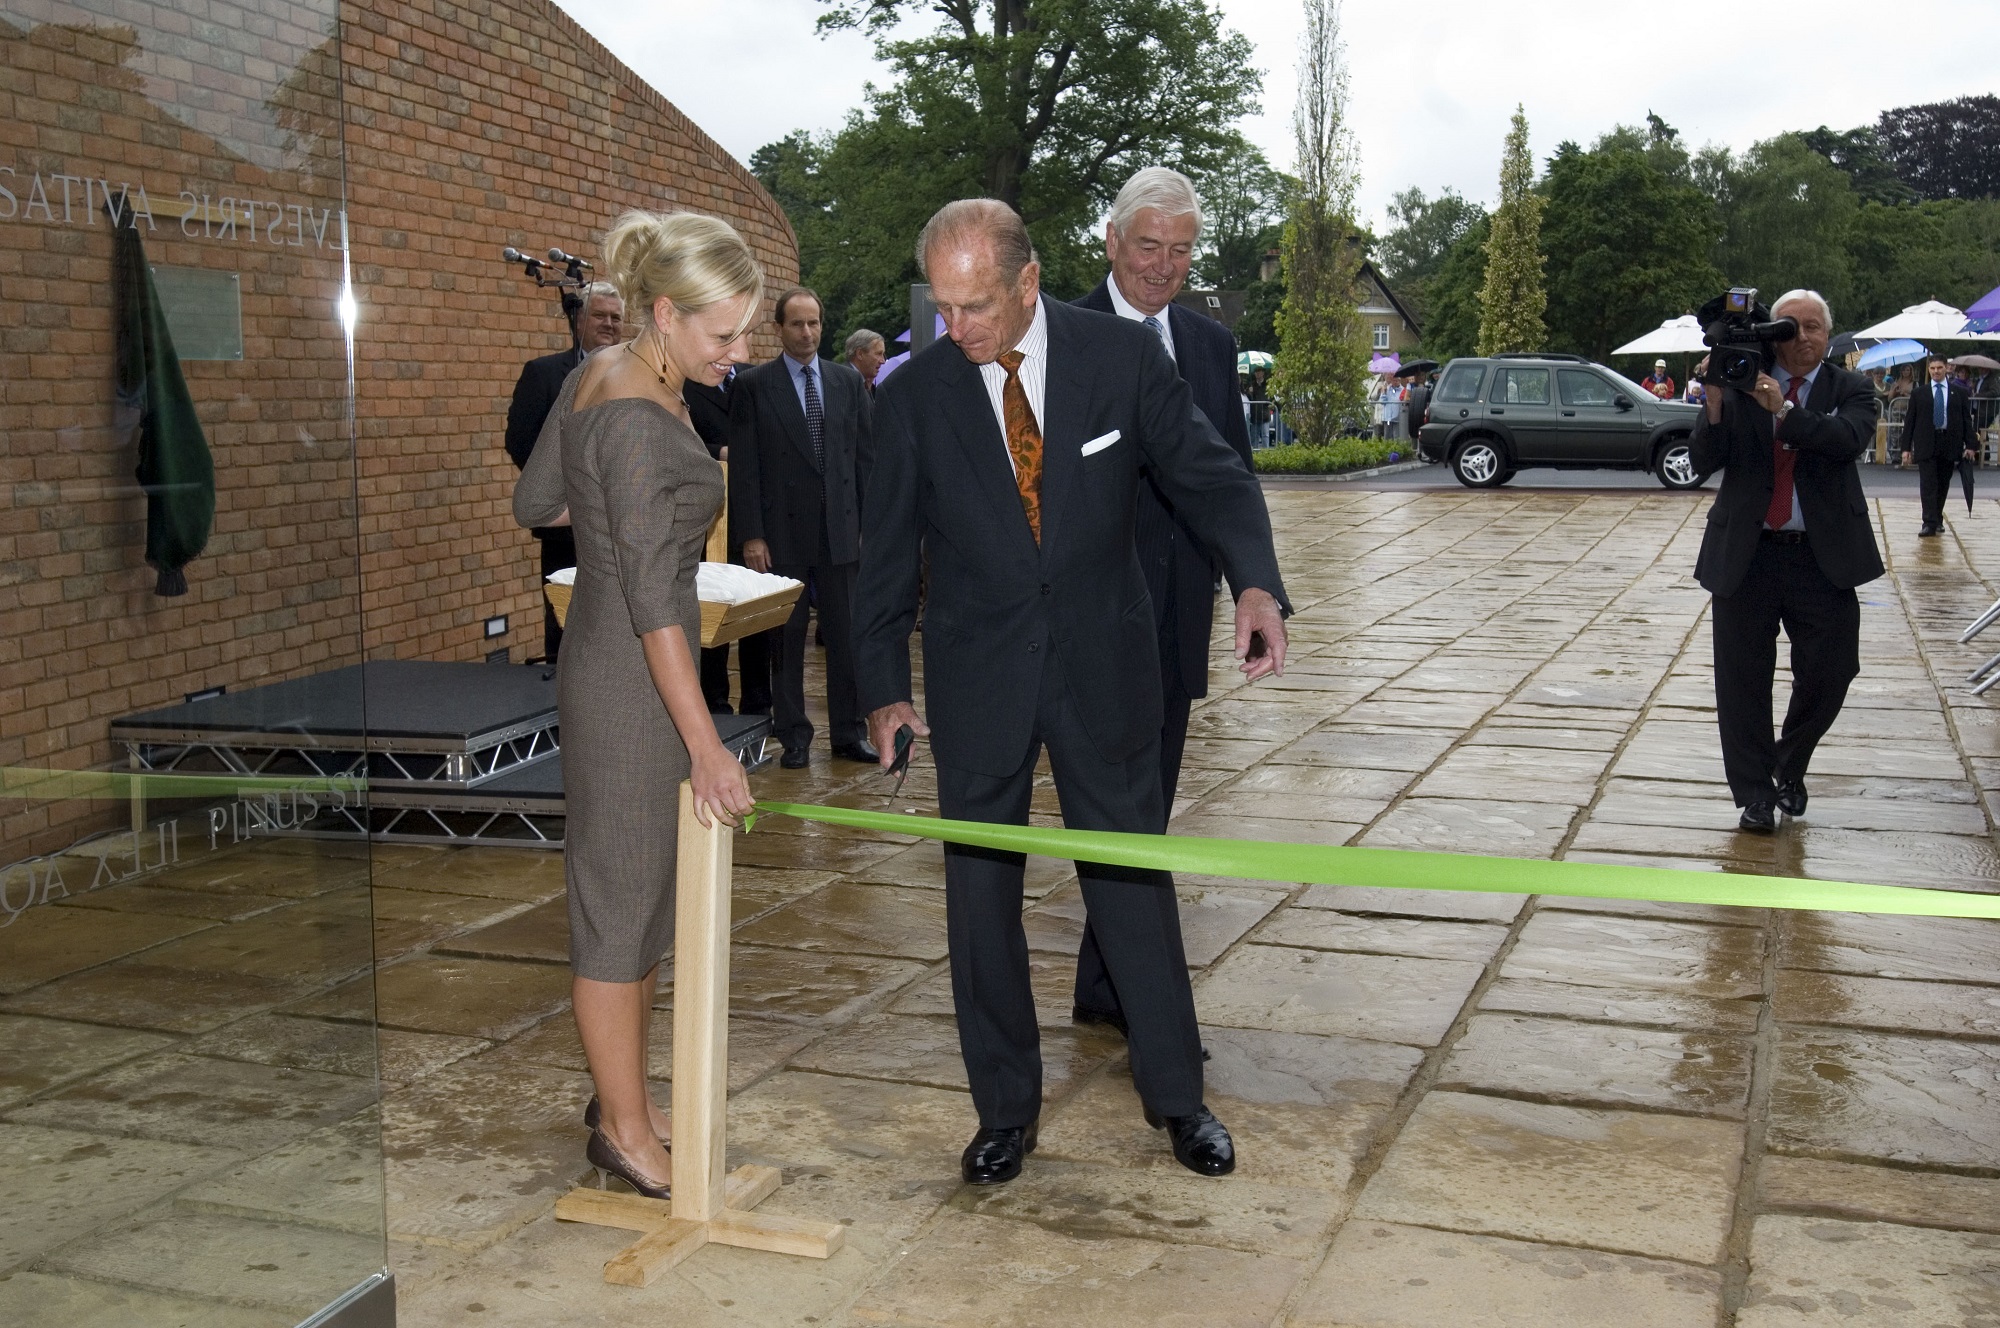 The Duke of Edinburgh cutting a ribbon outside the The Savill Building.